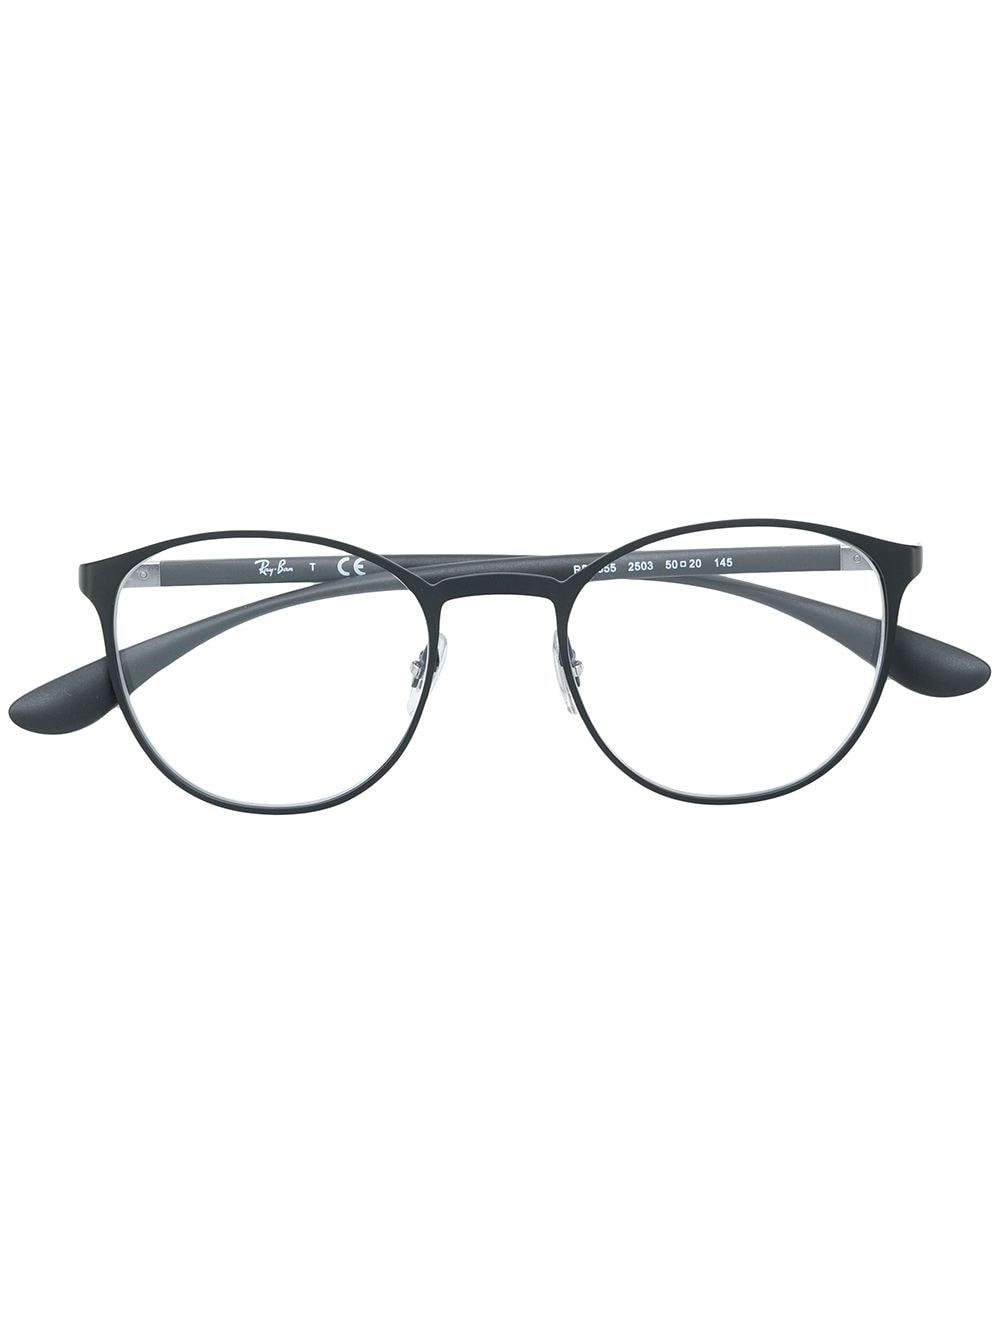 Ray-Ban round shaped glasses - Black von Ray-Ban